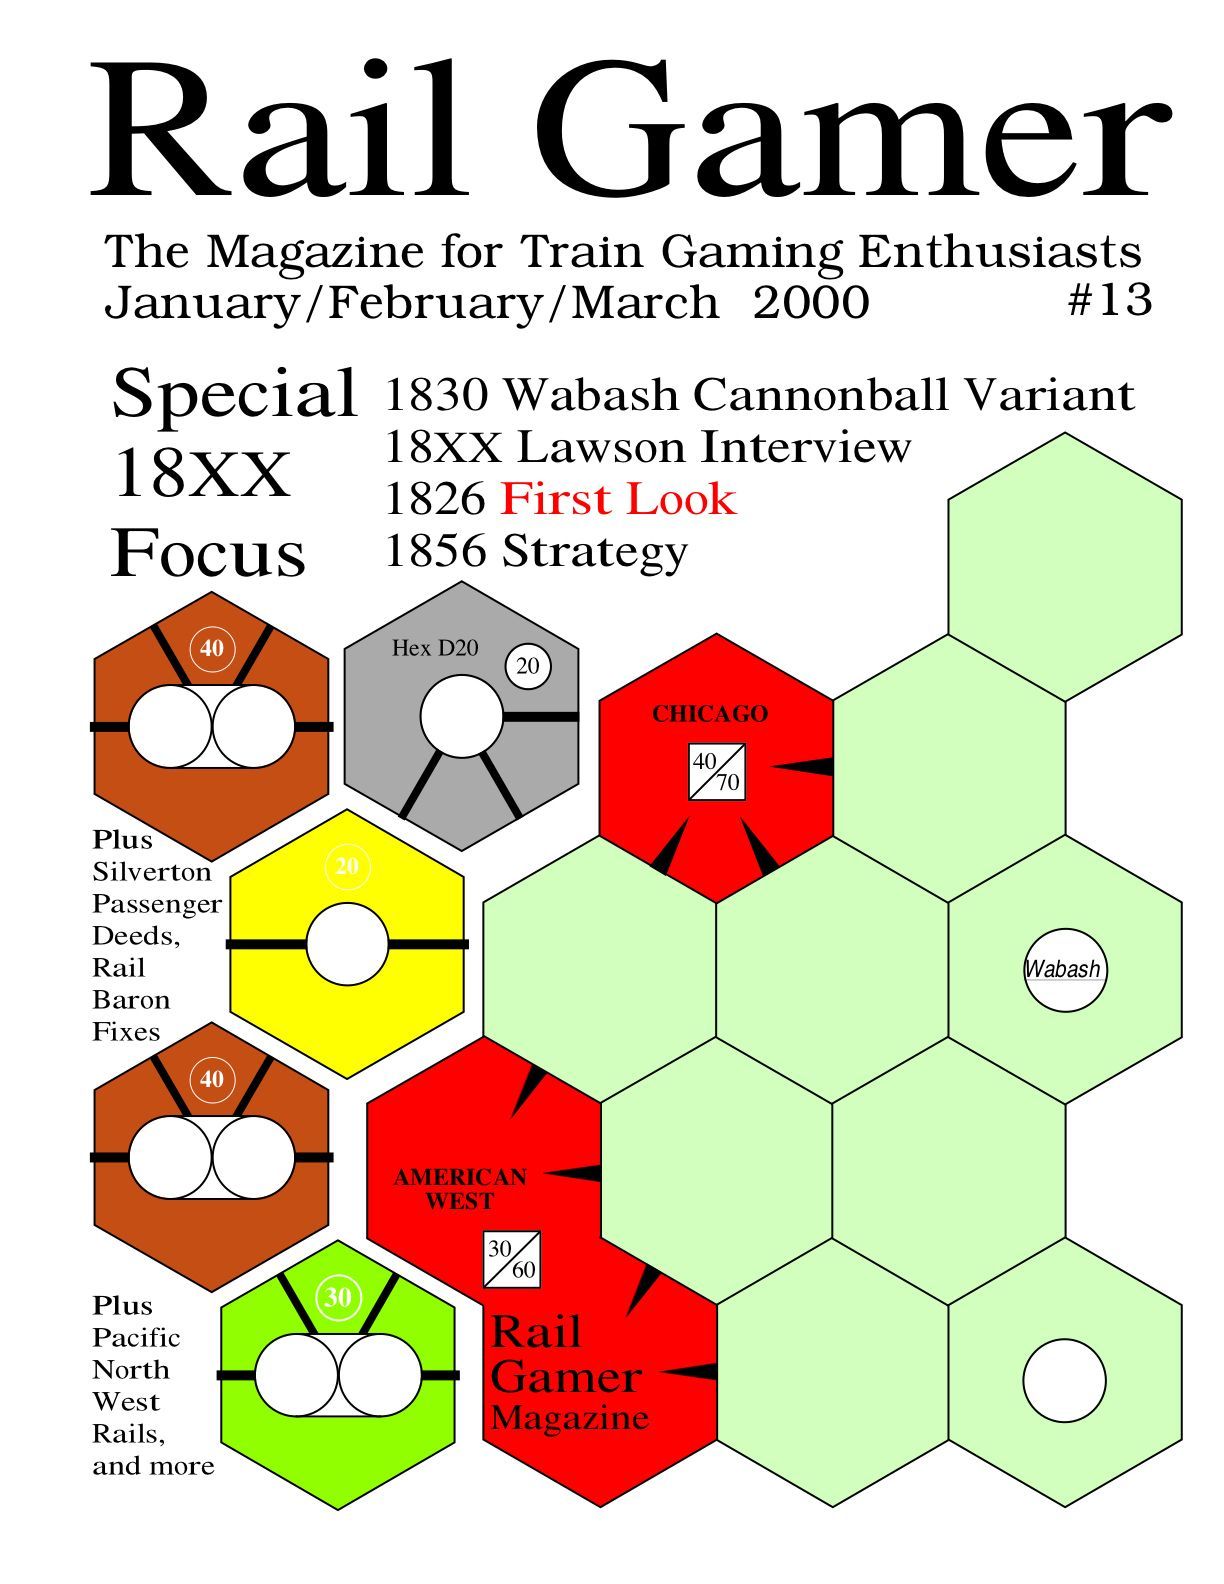 1830: Wabash Cannonball Variant